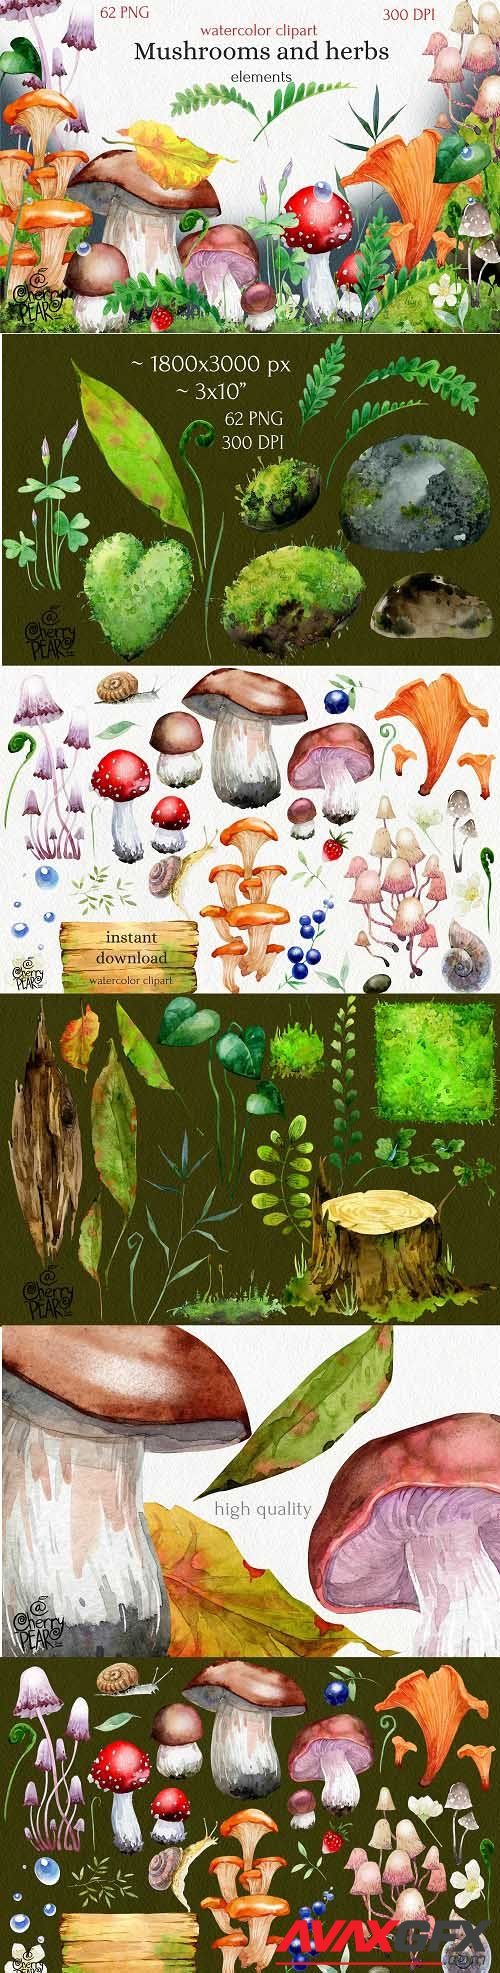 Watercolor cliparts of mushrooms and herbs, individual PNG - 1473824